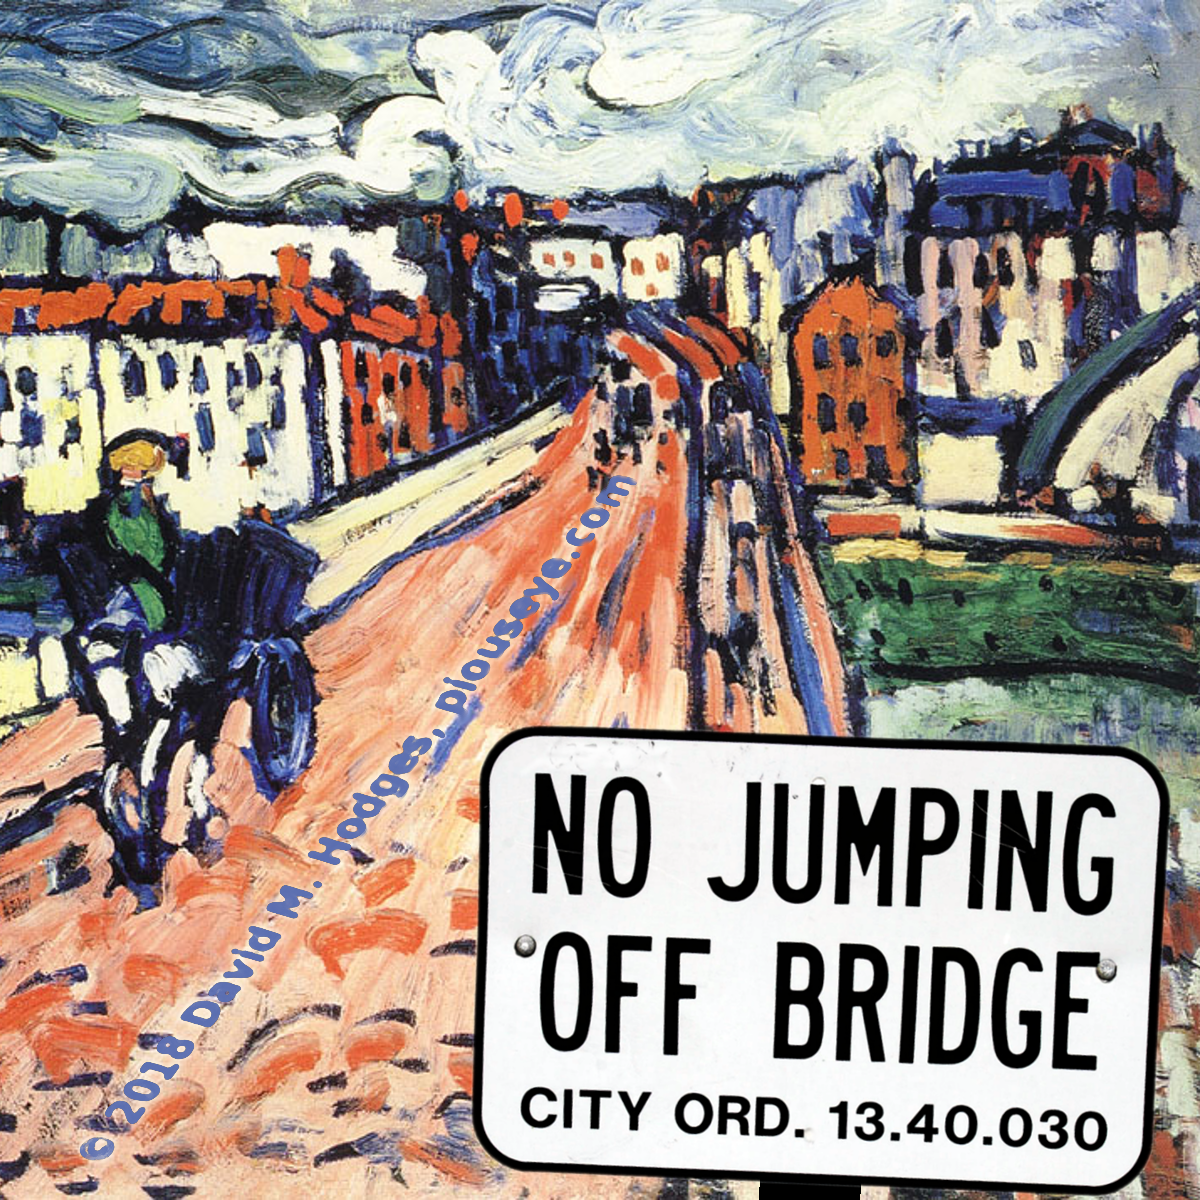 No jumping off bridge sign in front of impressionistic bridge